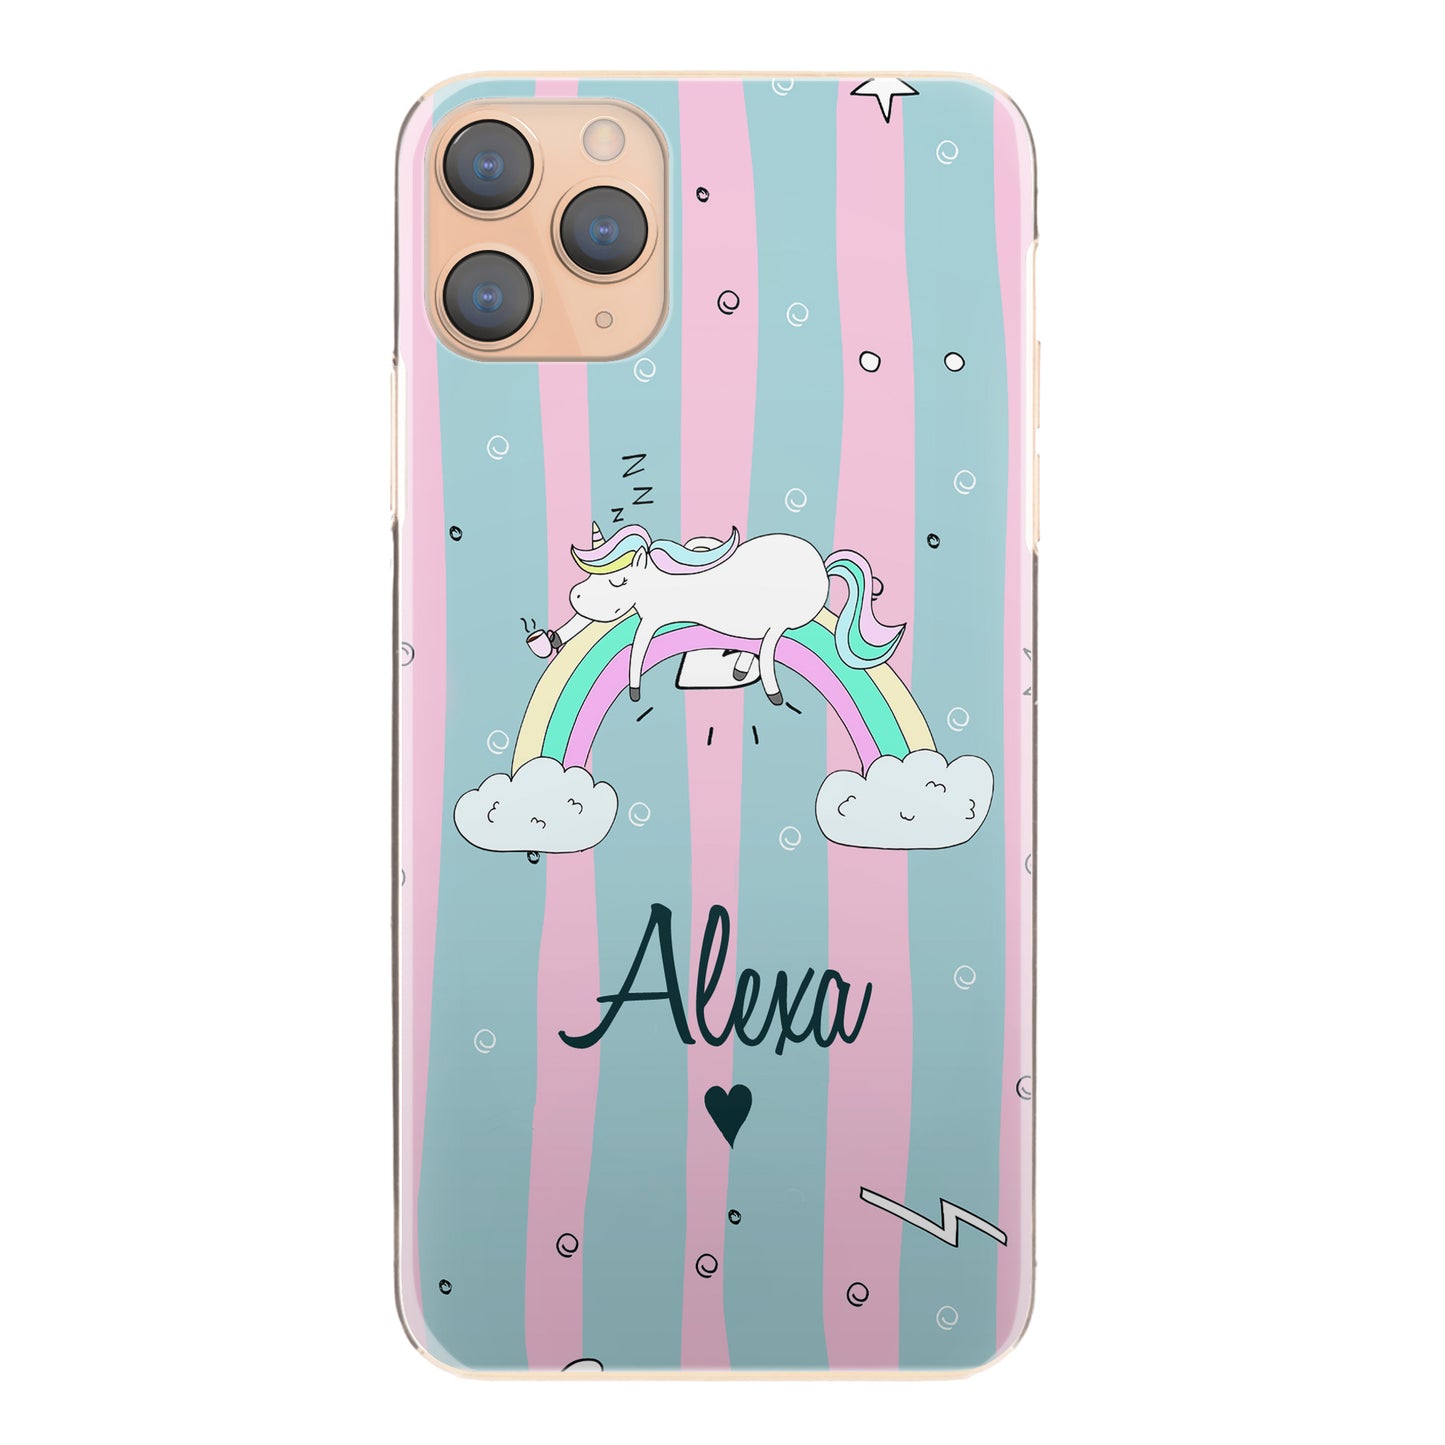 Personalised One Phone Hard Case with Sleeping Unicorn and Rainbow on Cartoon Stripes